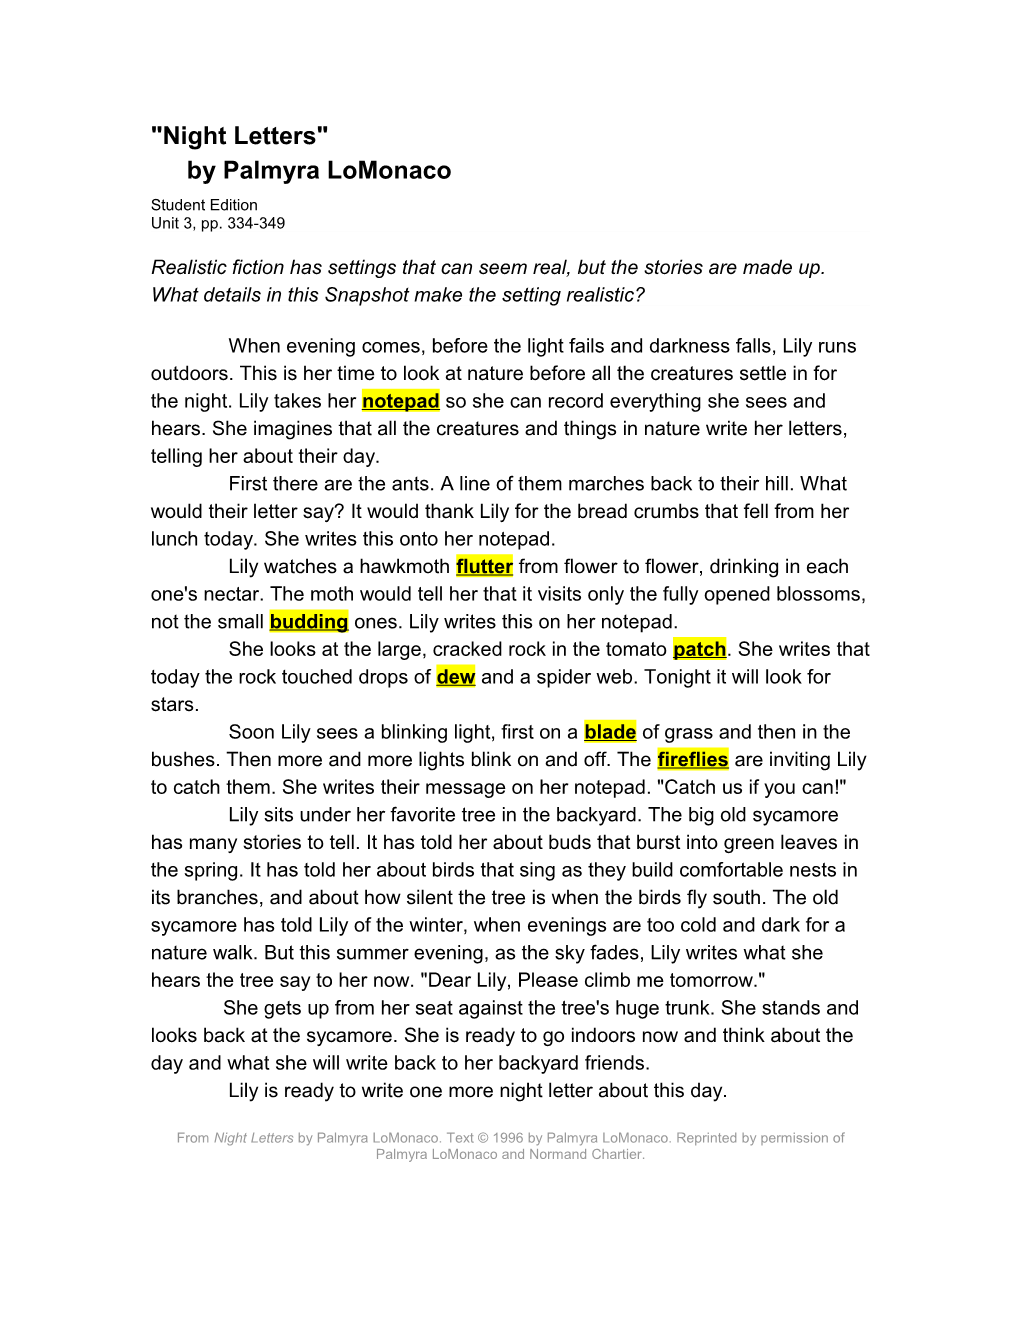 Night Letters by Palmyra Lomonaco